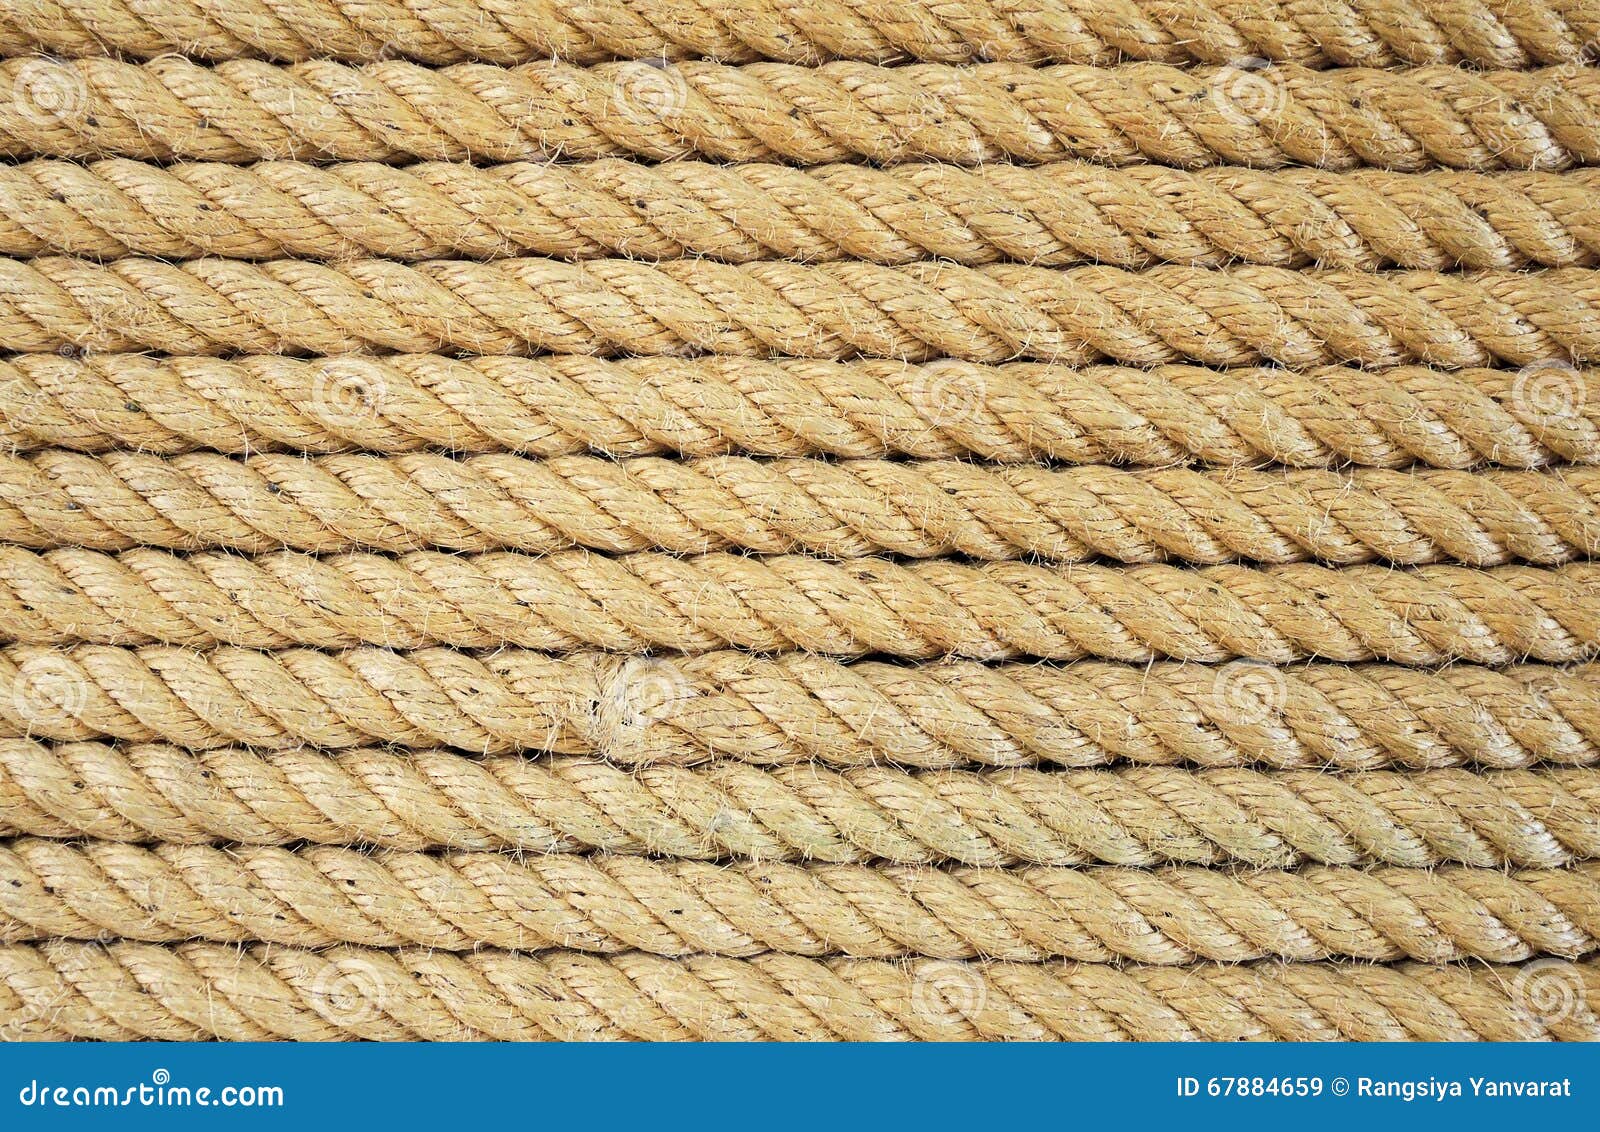 Rope background texture stock image. Image of cord, nylon - 67884659